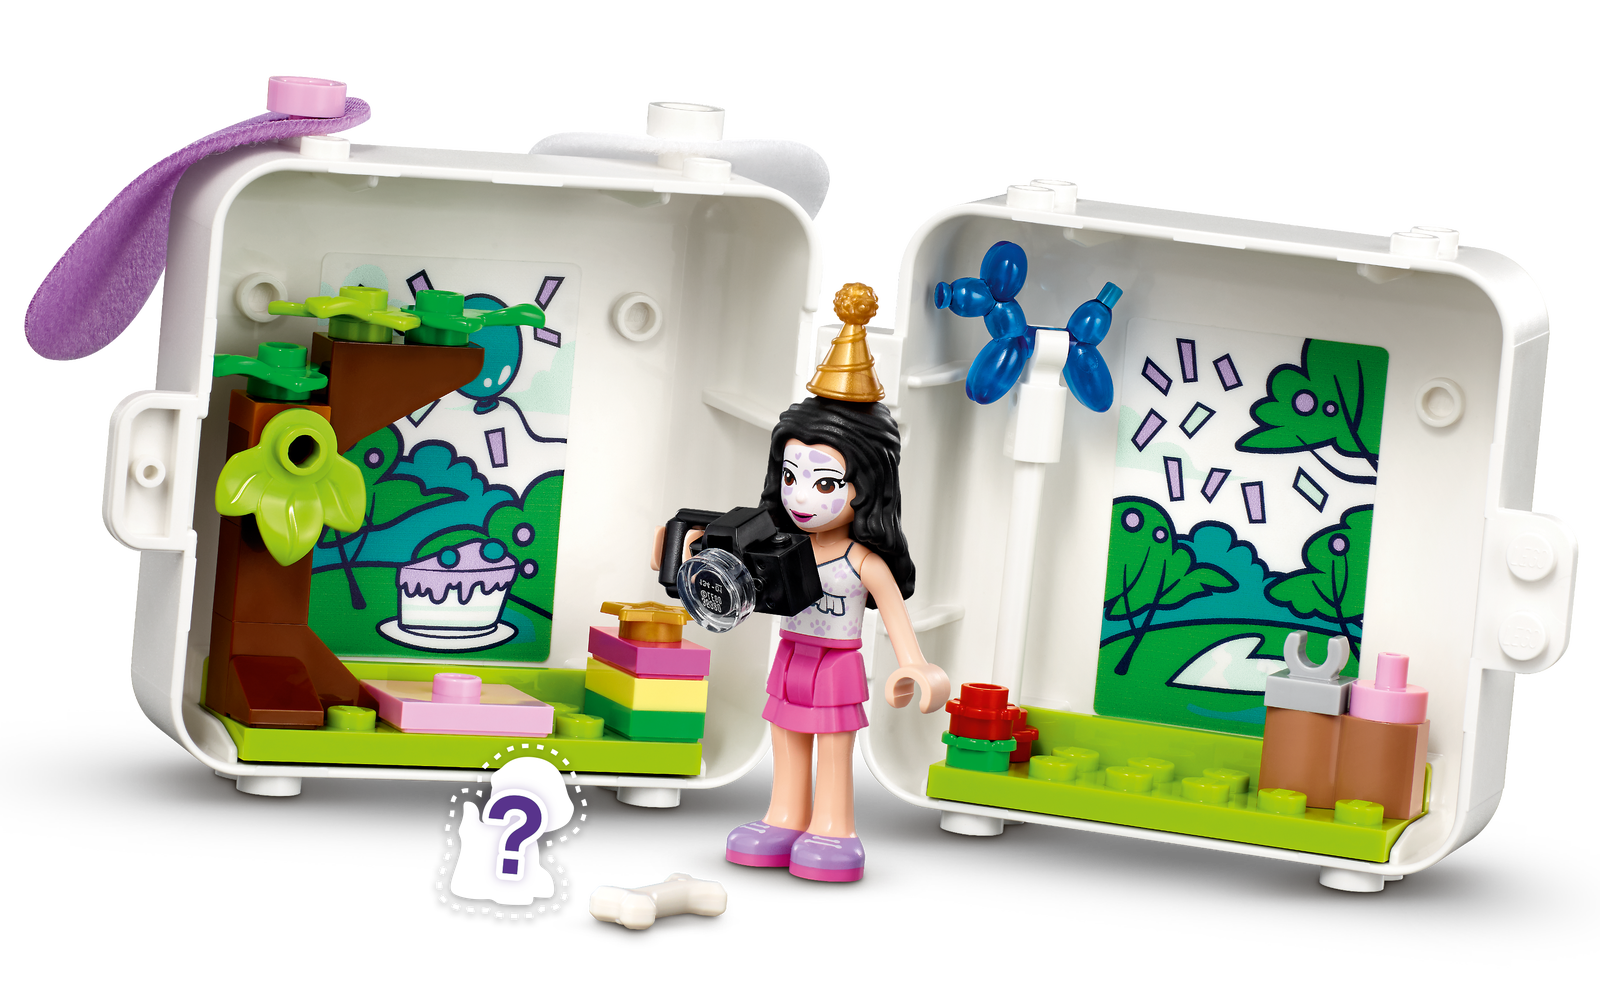 LEGO Friends Emma's Dalmatian Cube 41663